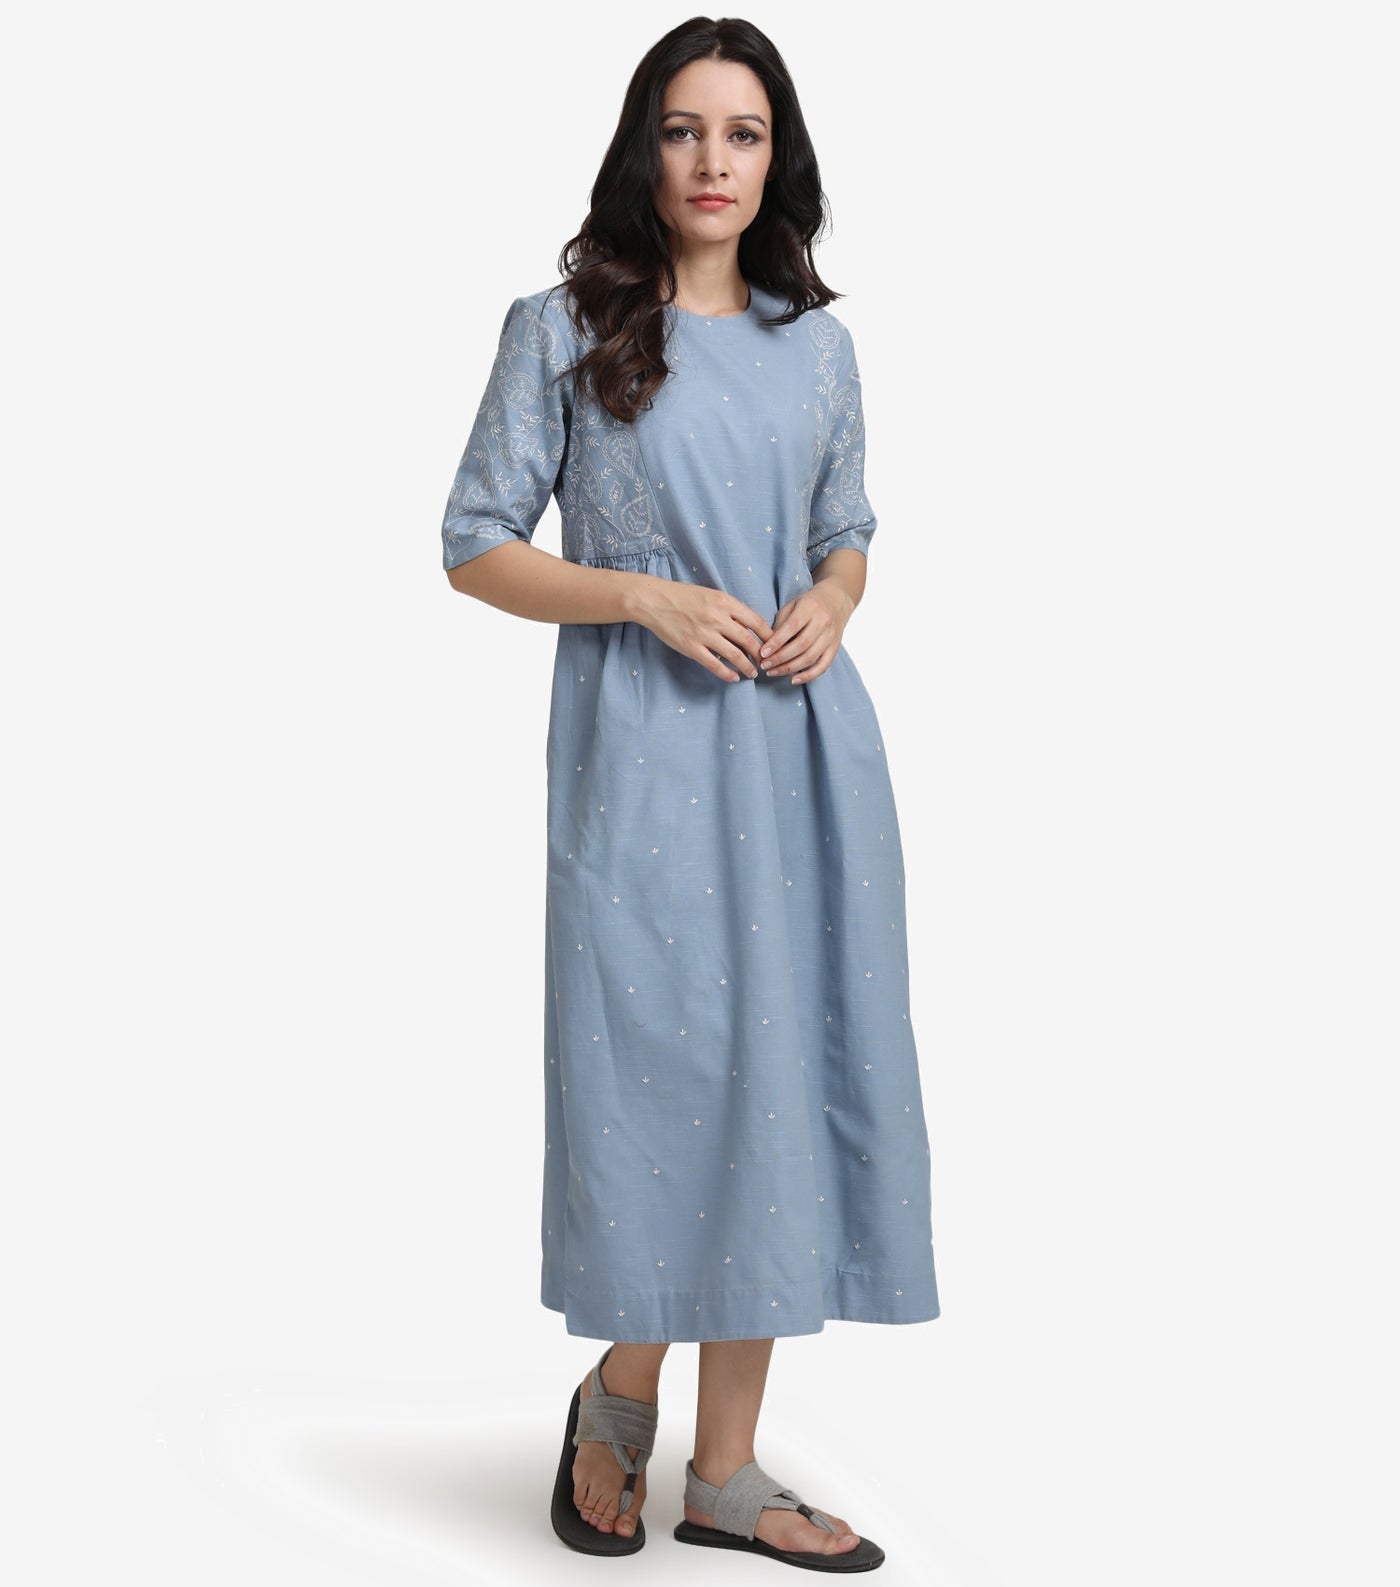 Blue cotton linen dress